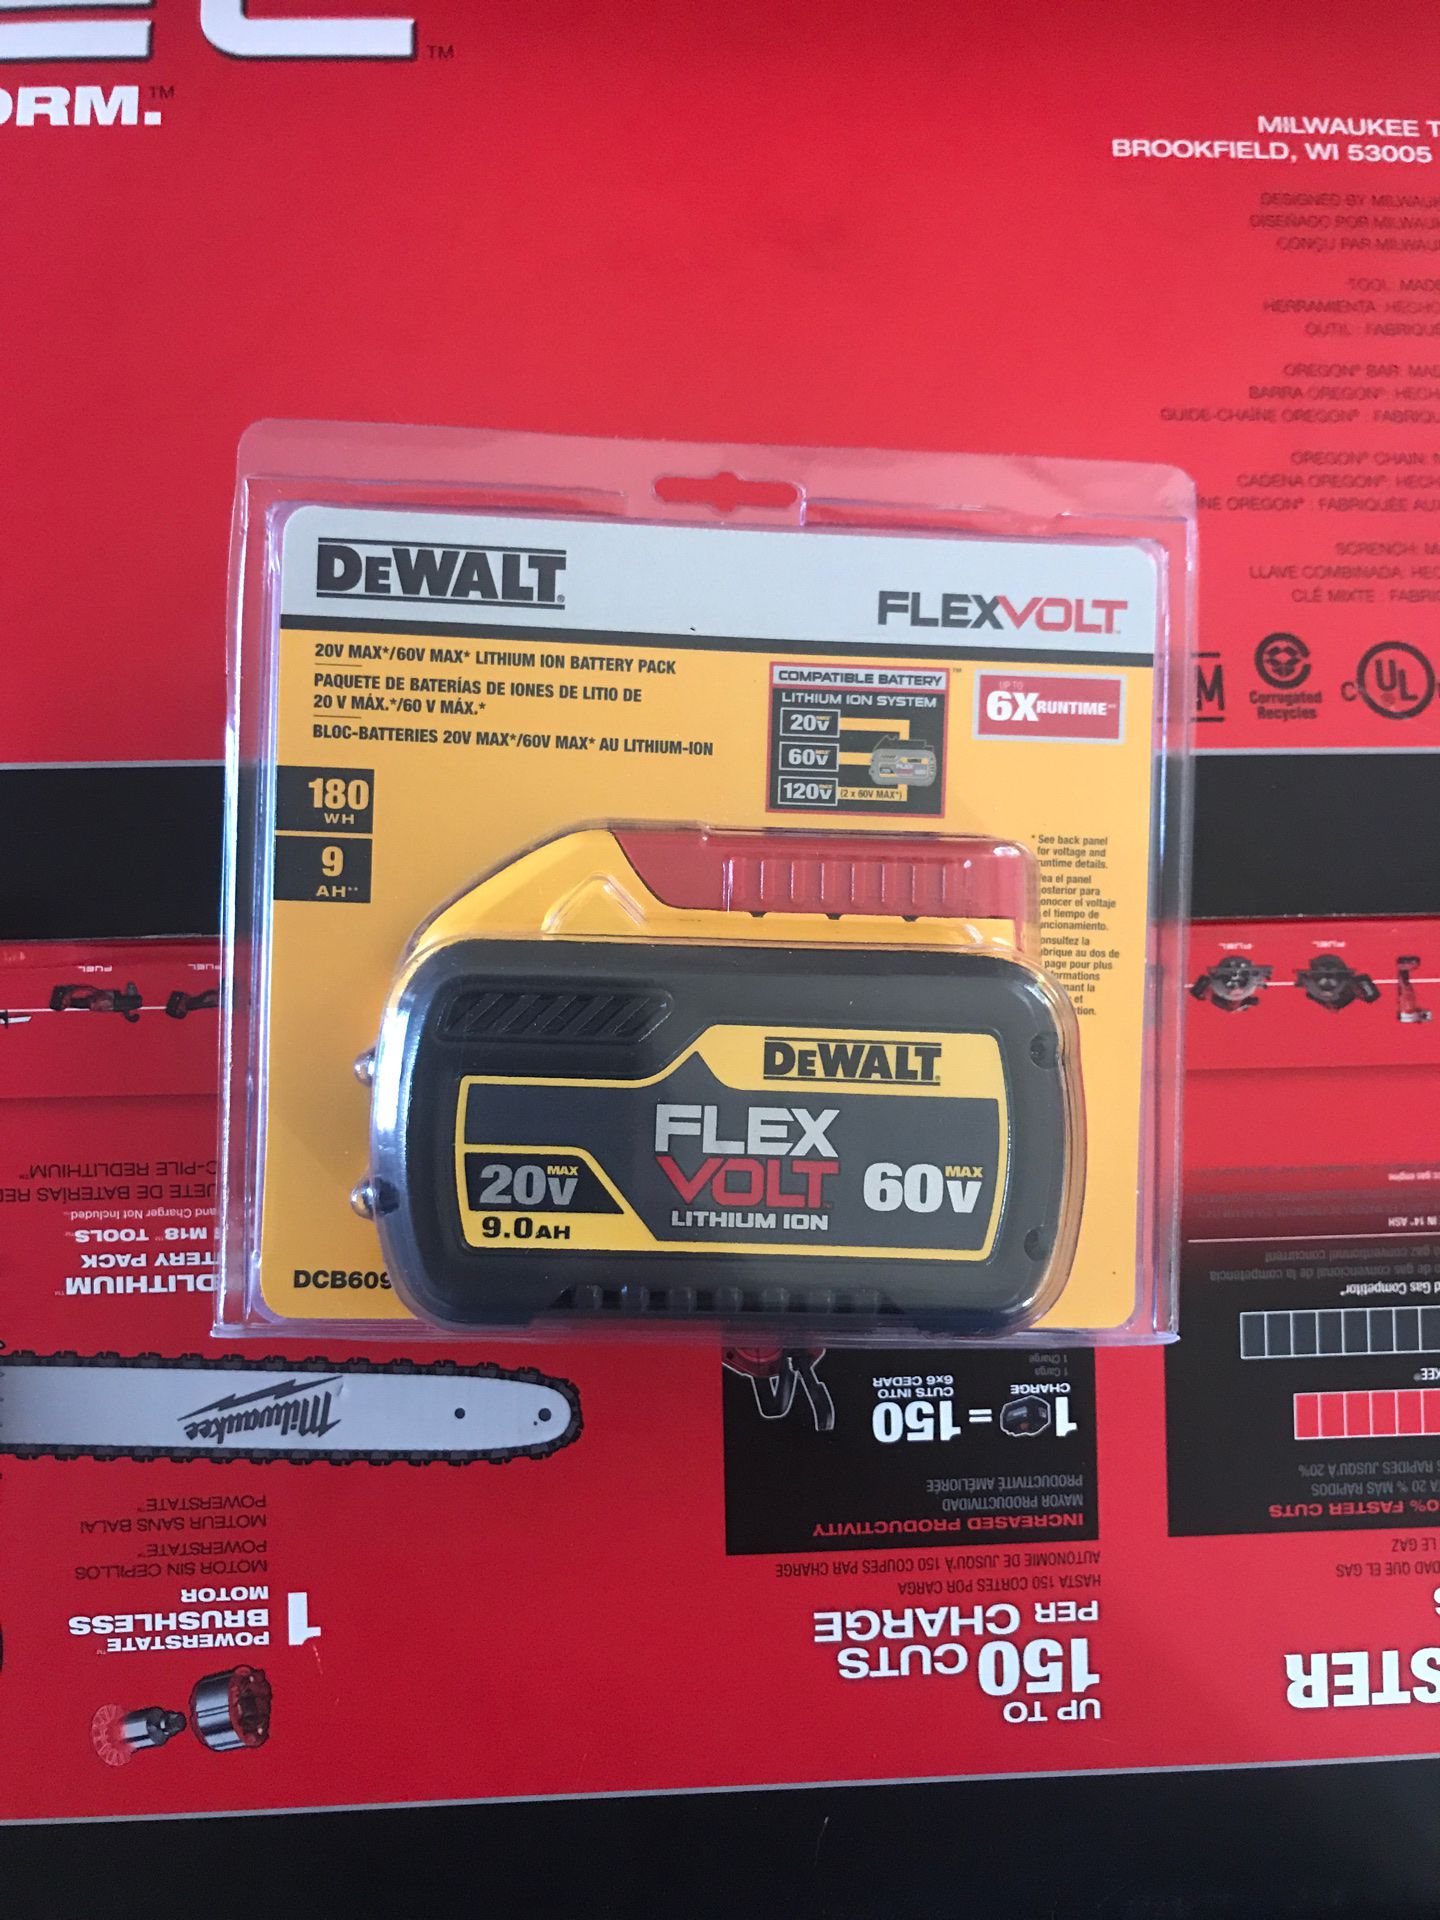 Dewalt flex volt lithium 20 vmax 9.0ah 60 vmax brand new (never used) pickup only